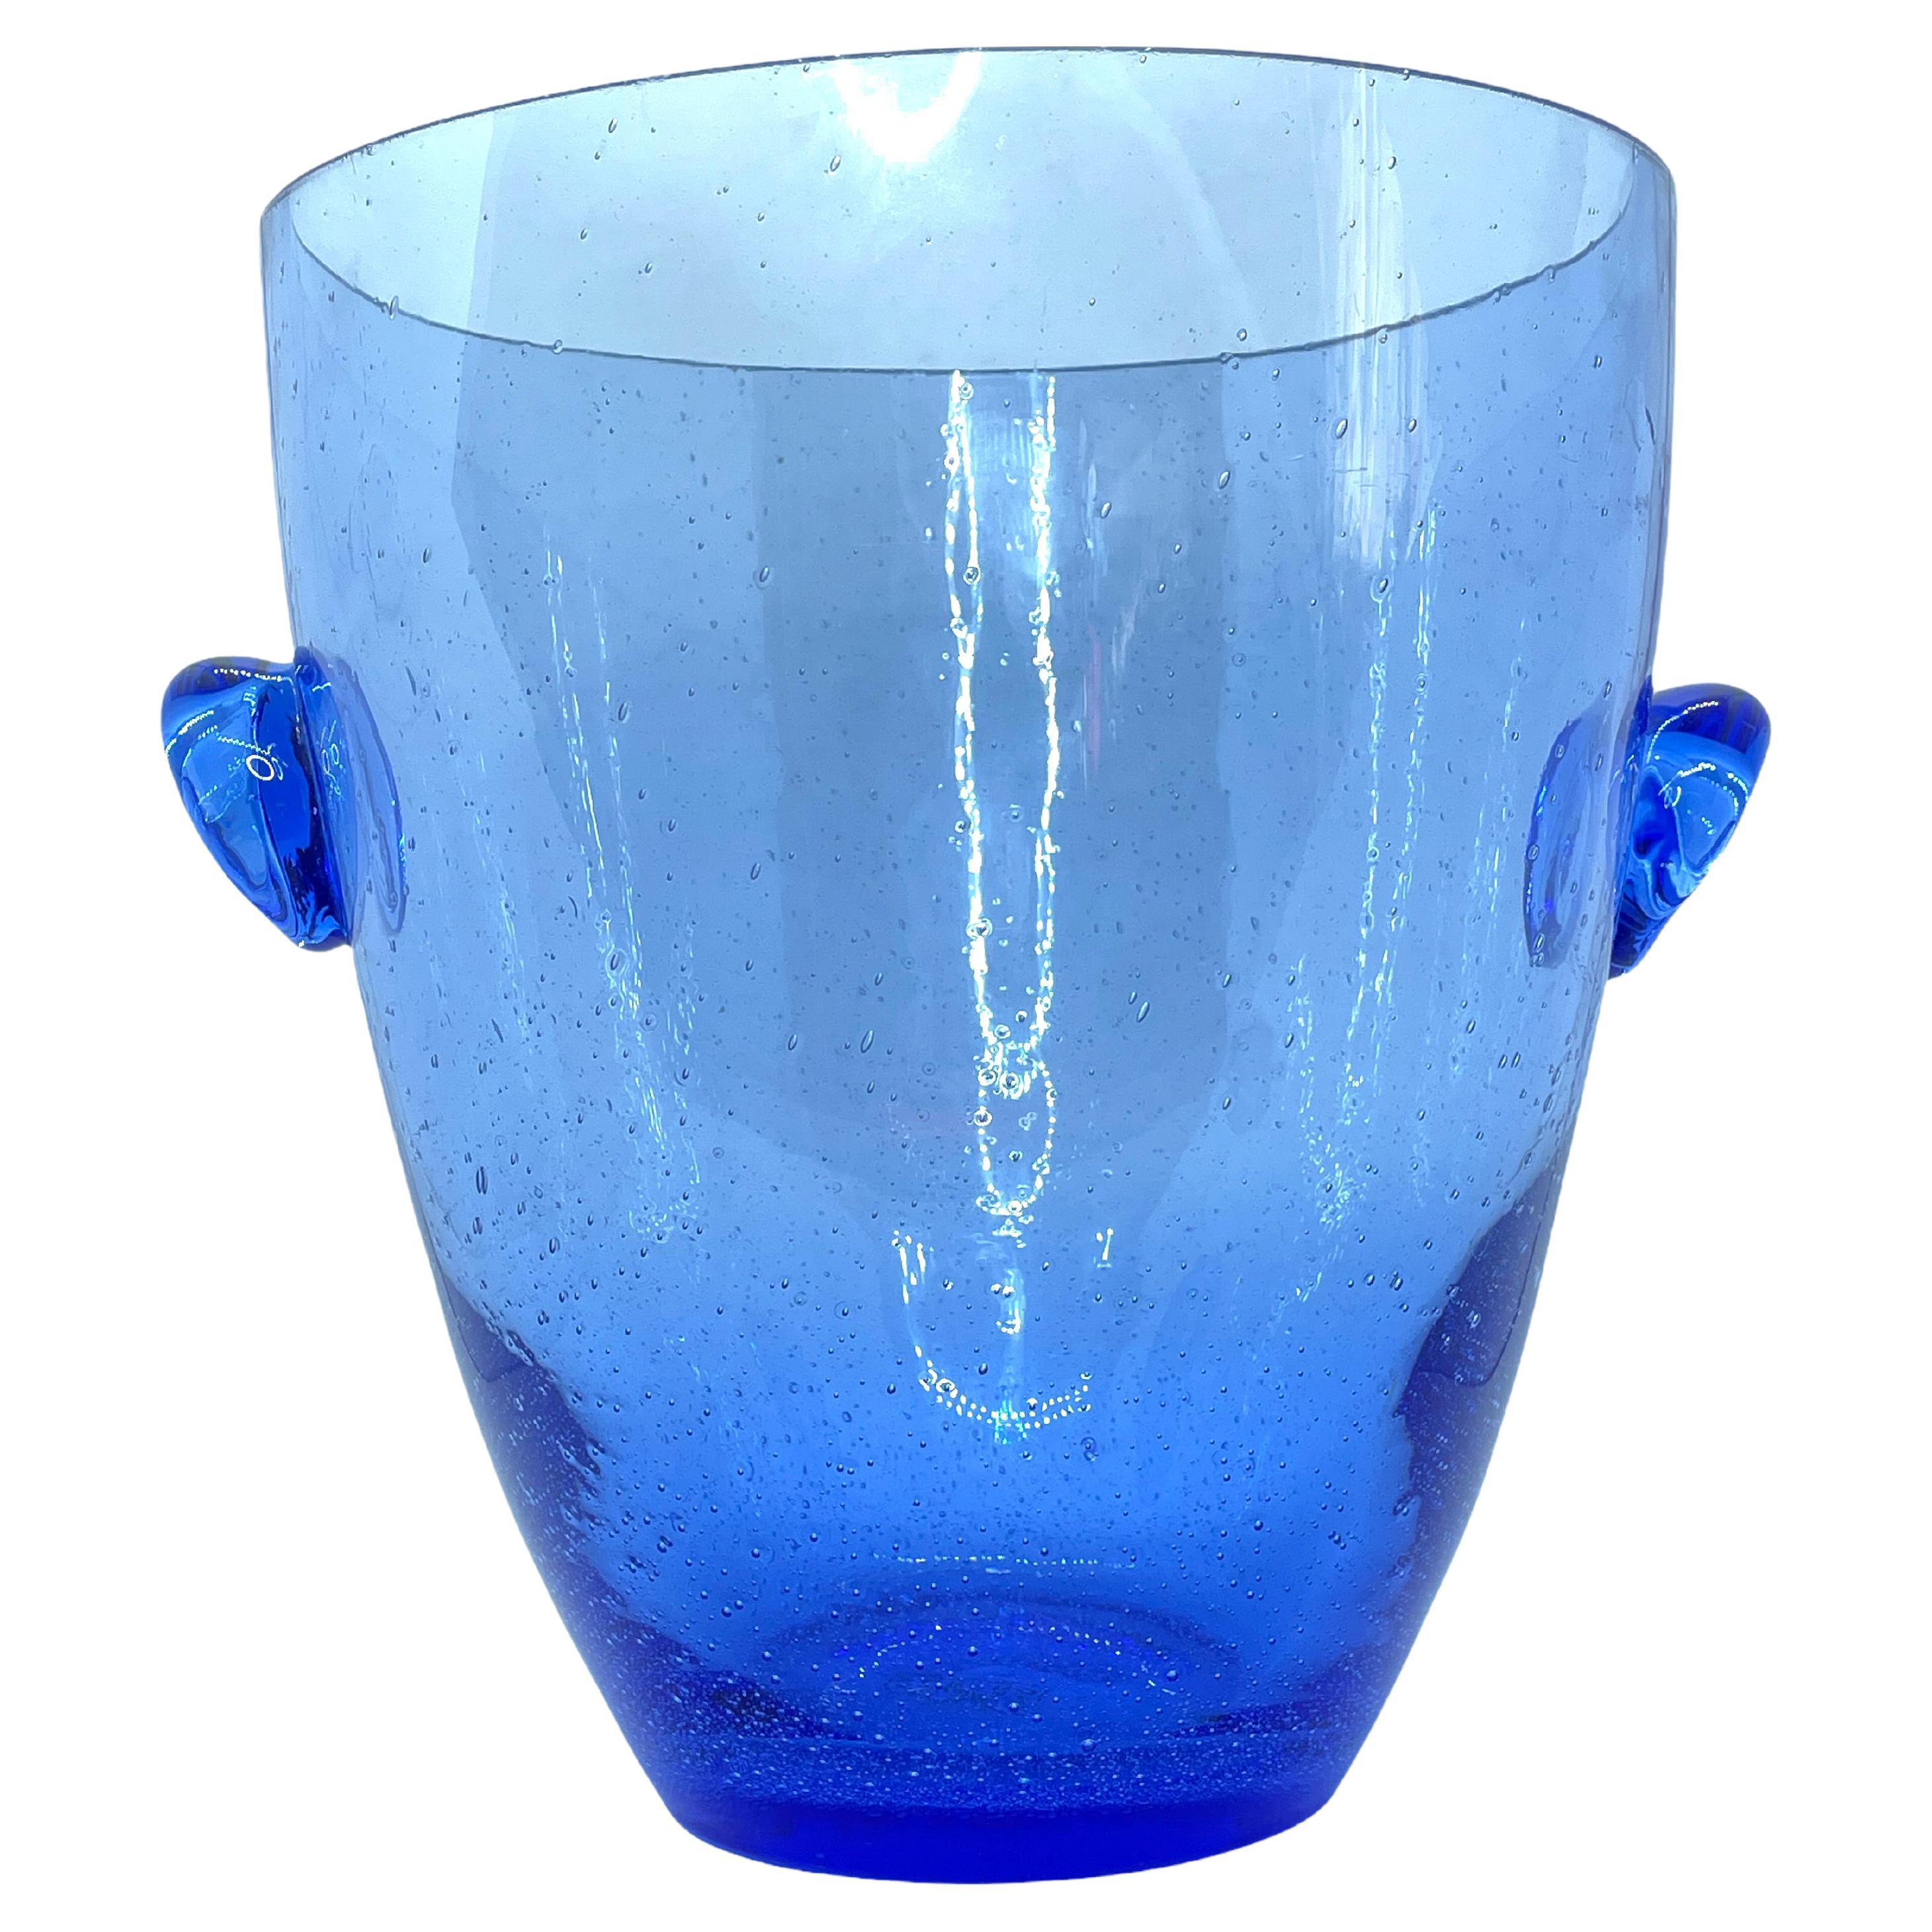 Mid-Century Modern Murano Glass Champagne Cooler Ice Bucket, Germany, 1950s